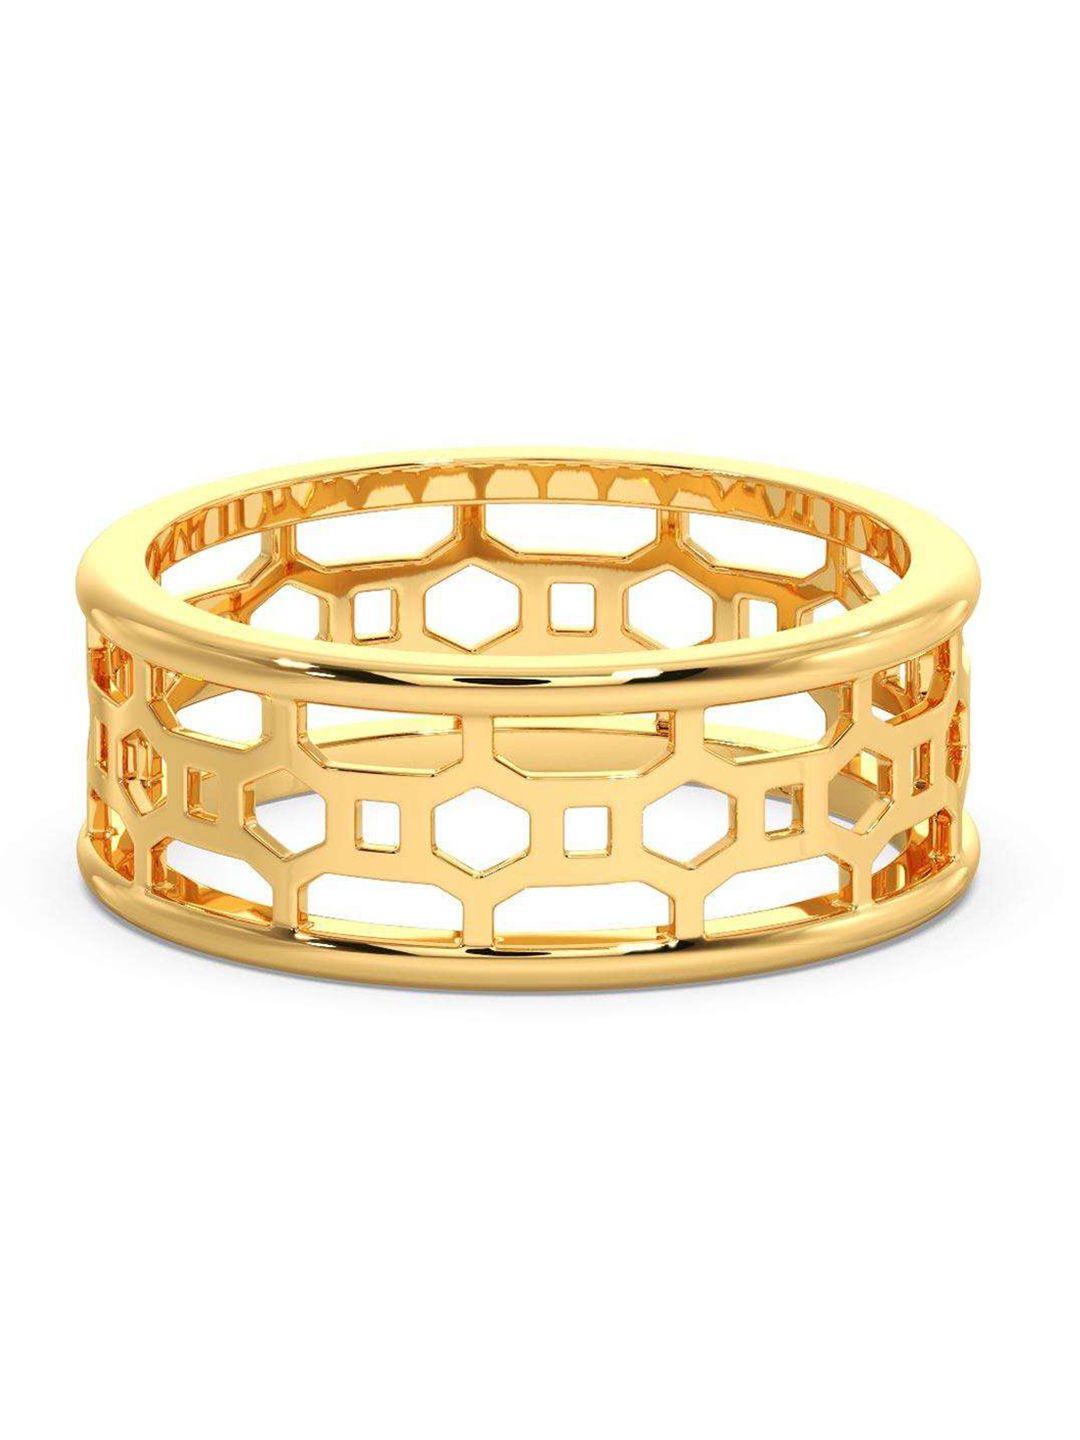 candere-a-kalyan-jewellers-company-men-14kt-bis-hallmark-gold-ring---3.44-gm